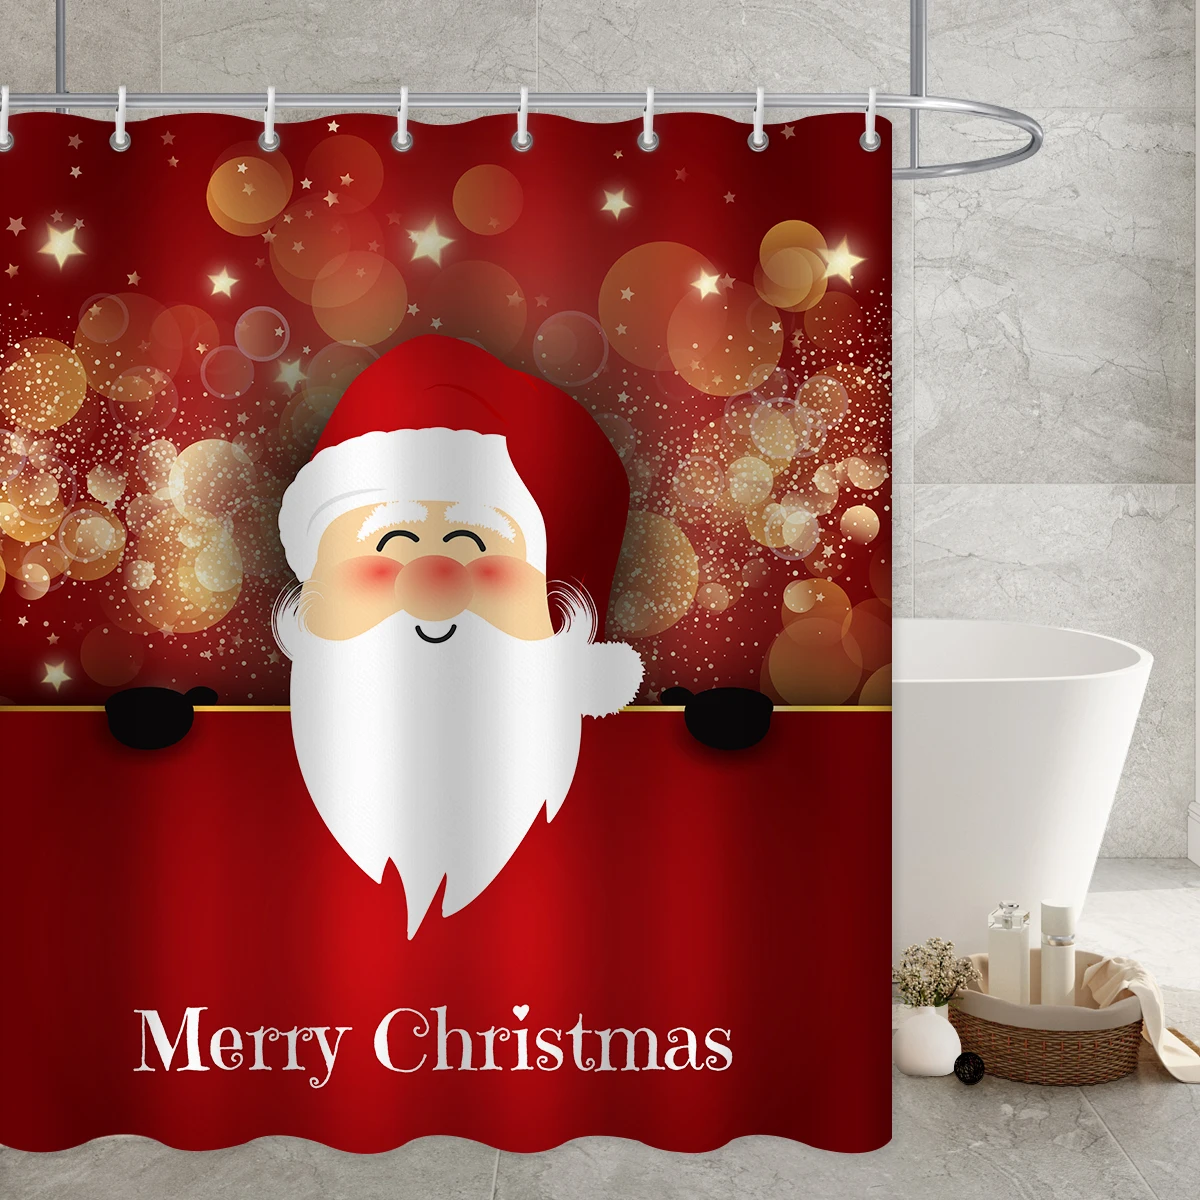 

Series Long Shower Curtain Christmas Festive Waterproof Duschvorhang Santa Claus Moose Bathroom Curtains with Hooks Rail Liner